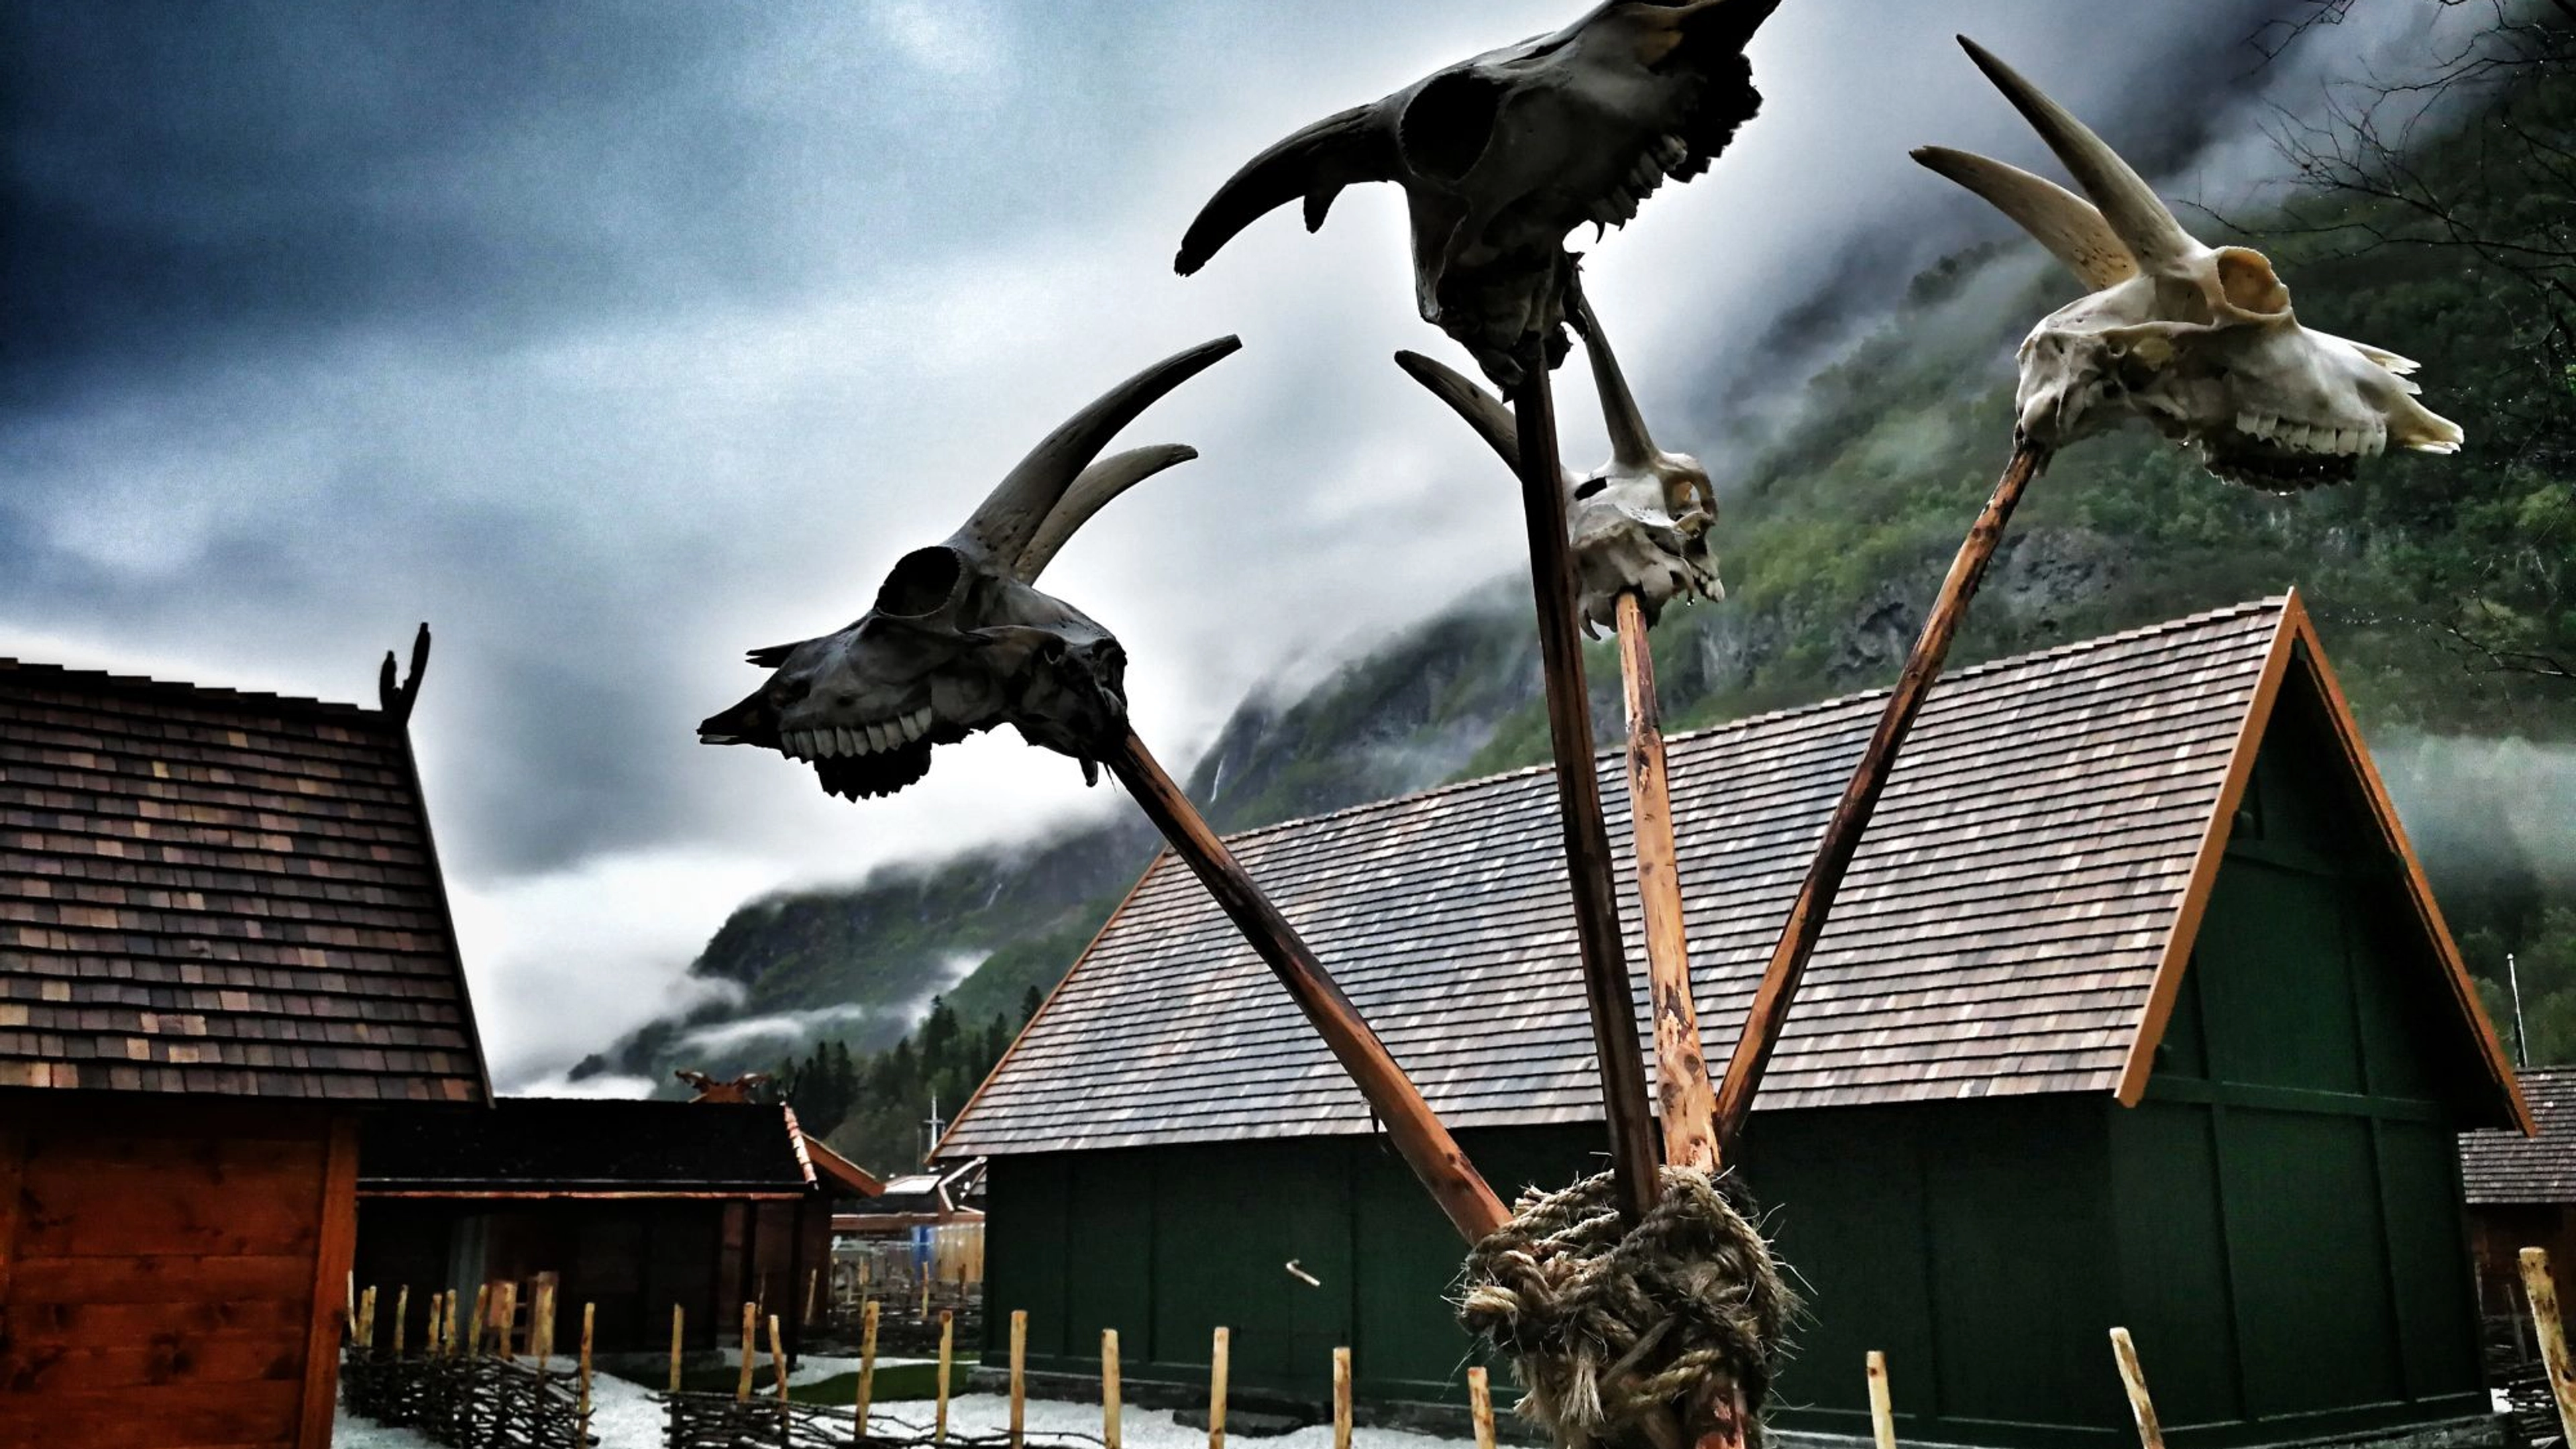 Vikingbyen Gudvangen - Norway